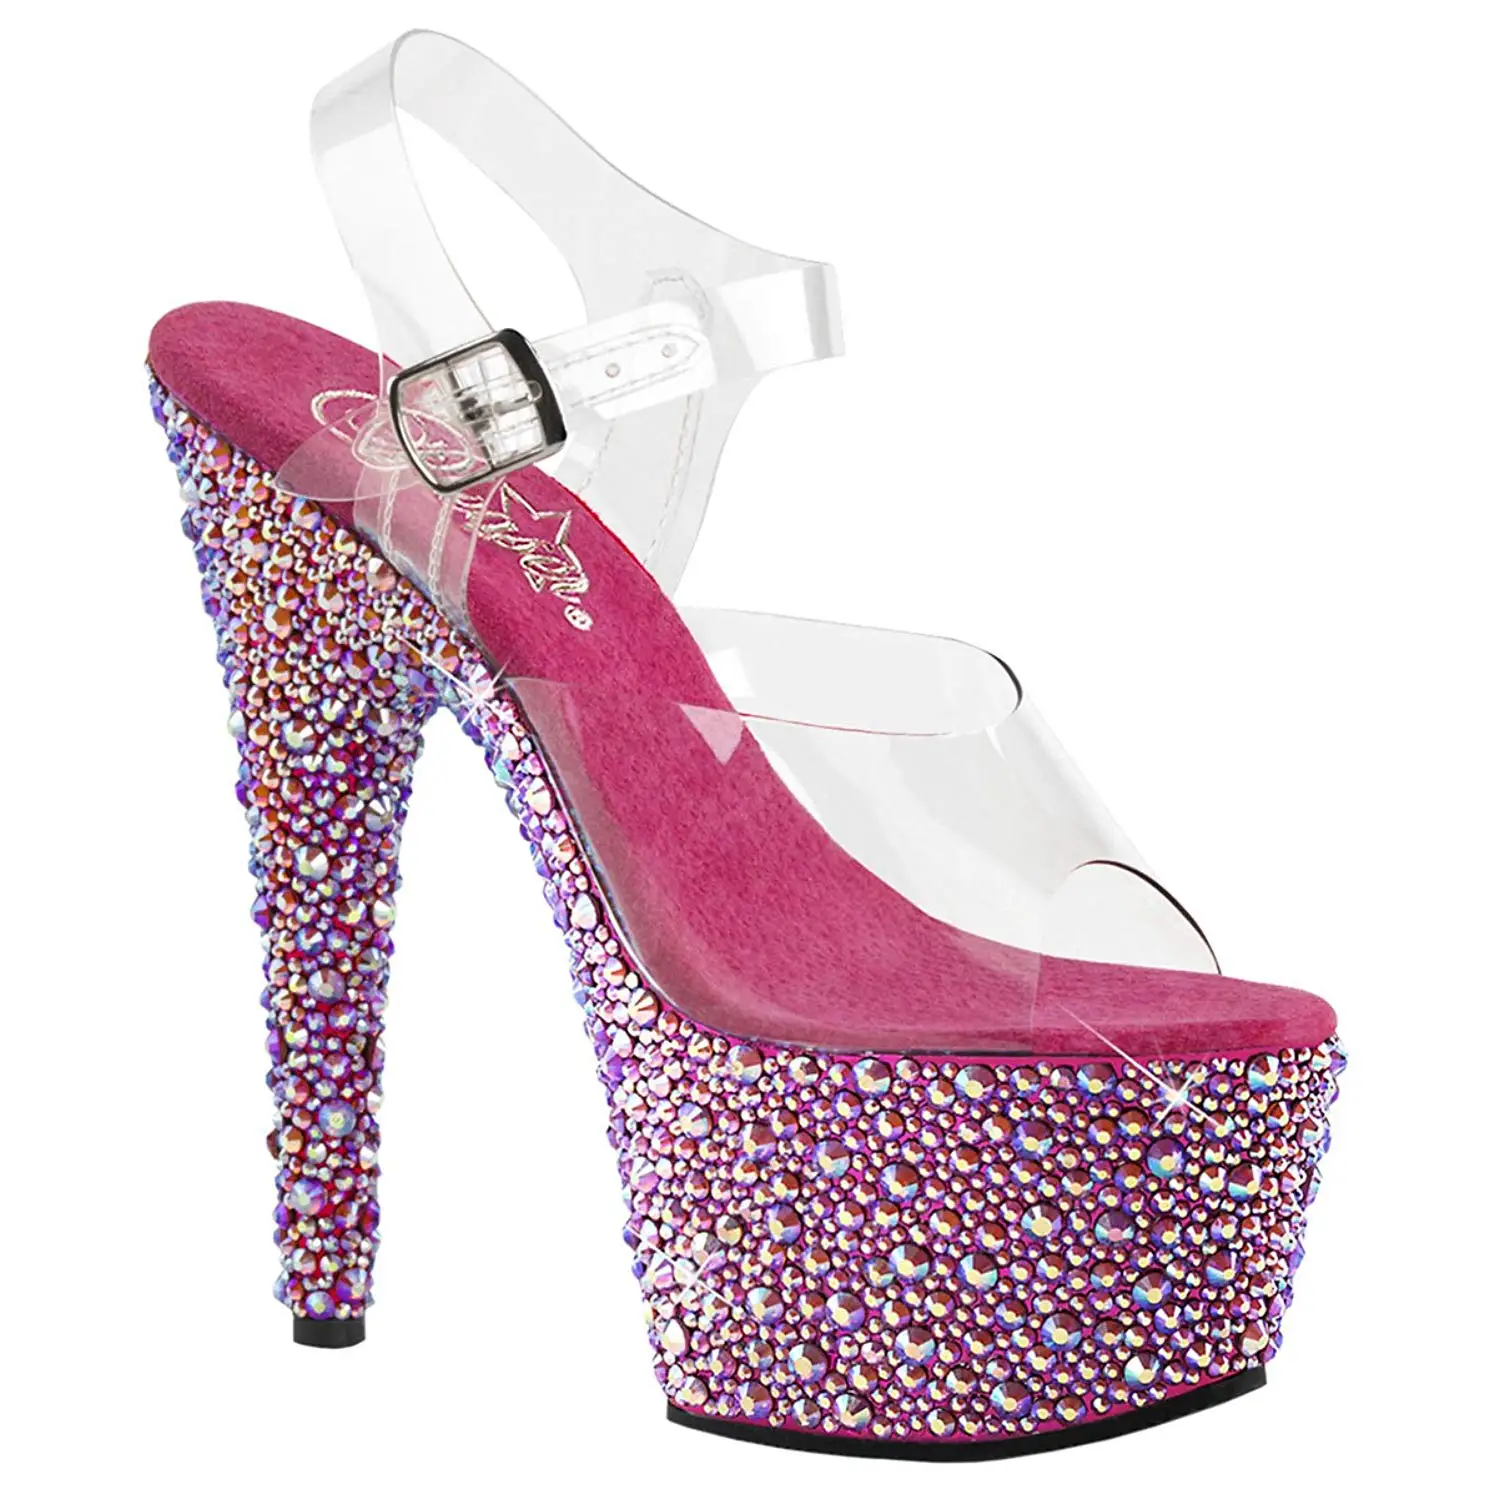 light pink 3 inch heels